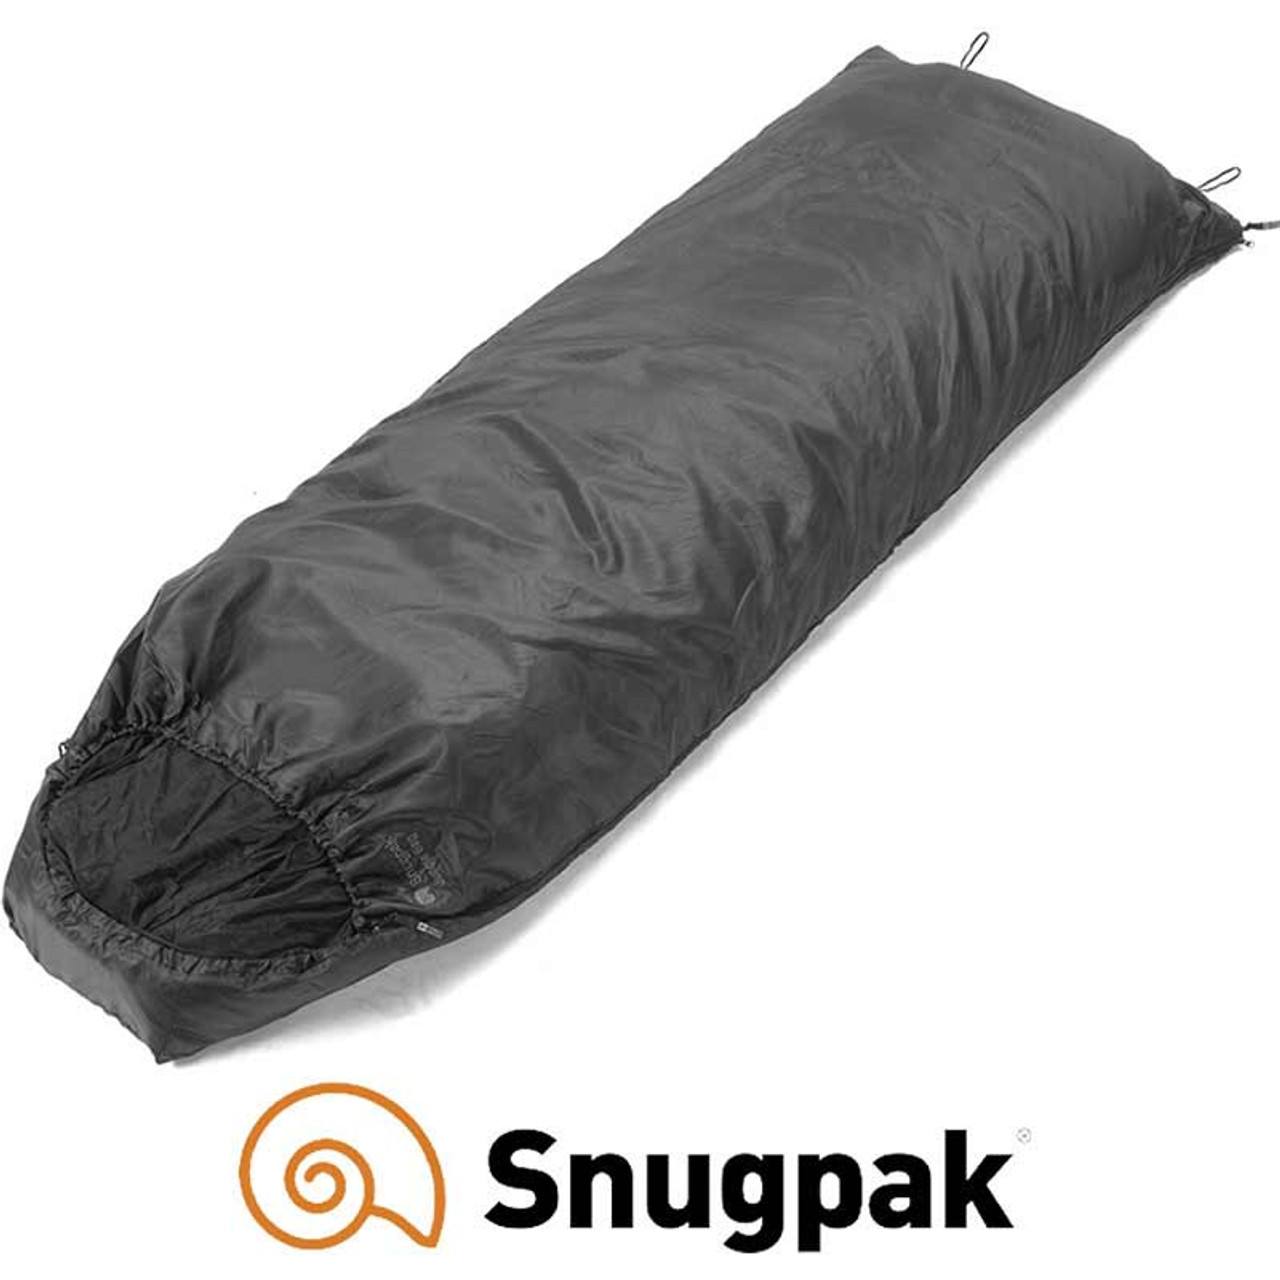 Snugpak Jungle Bag Sleeping Bag Black with Right Zipper 35 to 45 Degrees F